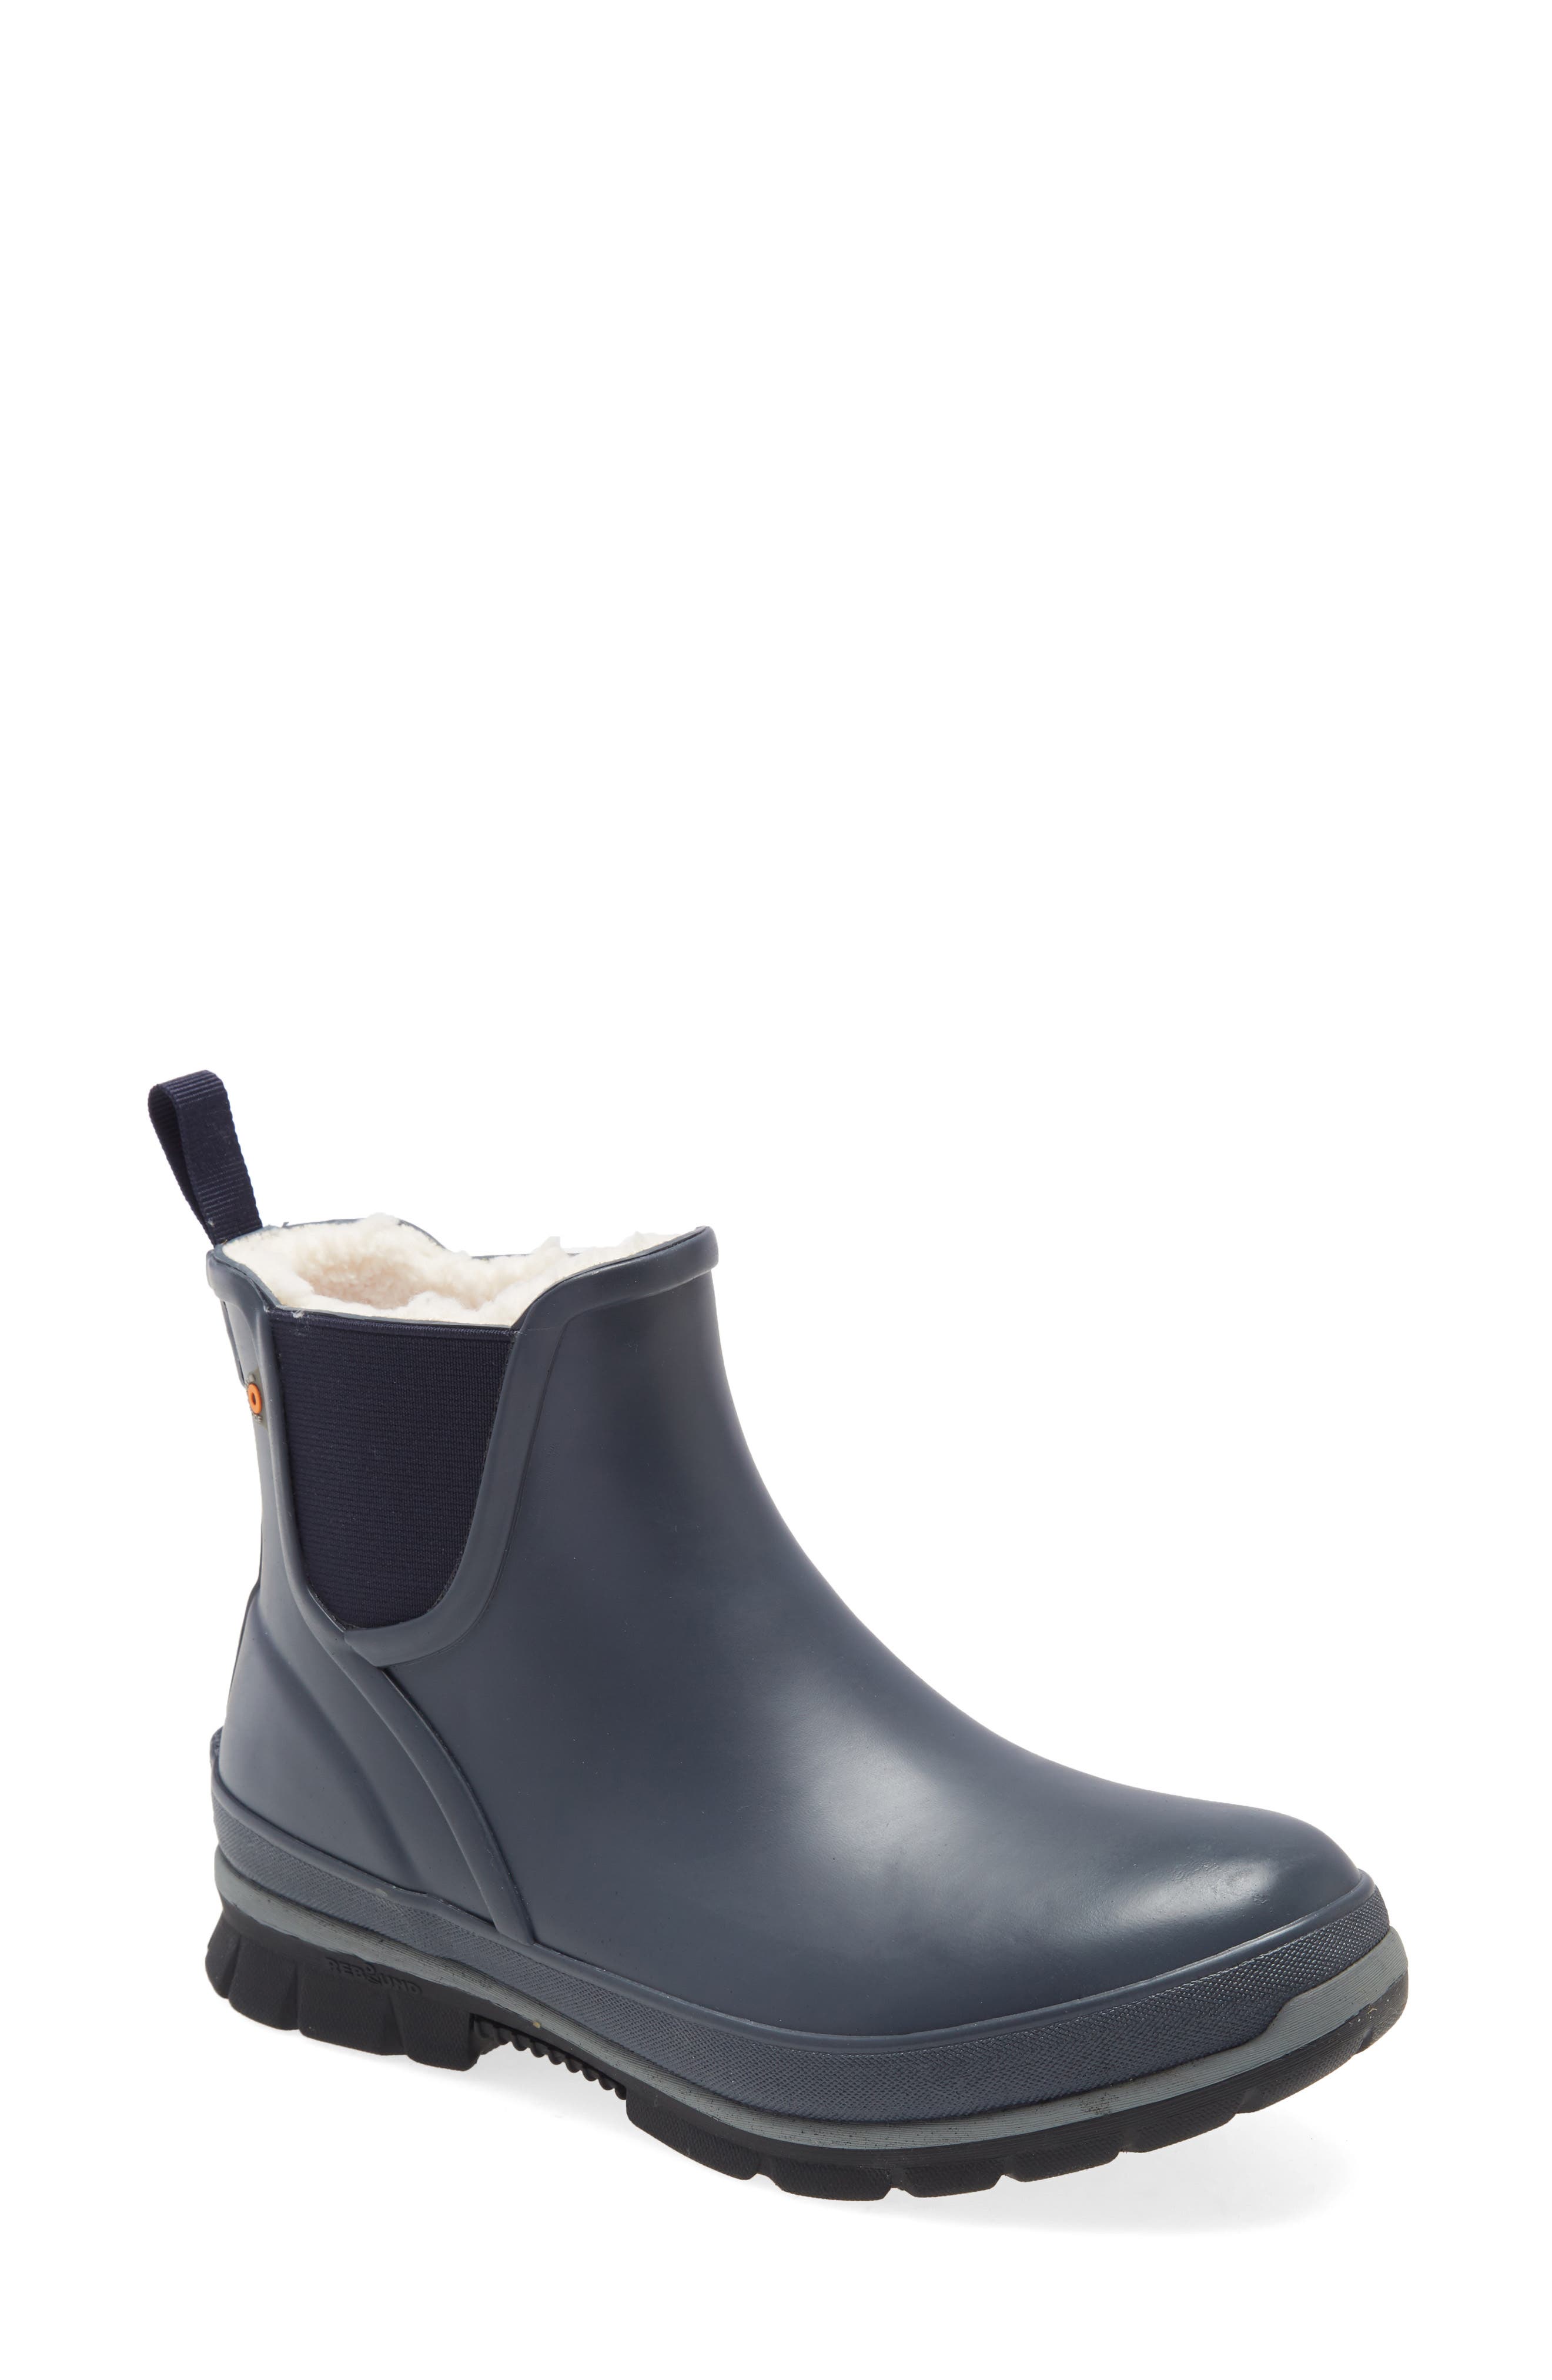 slip on waterproof boots